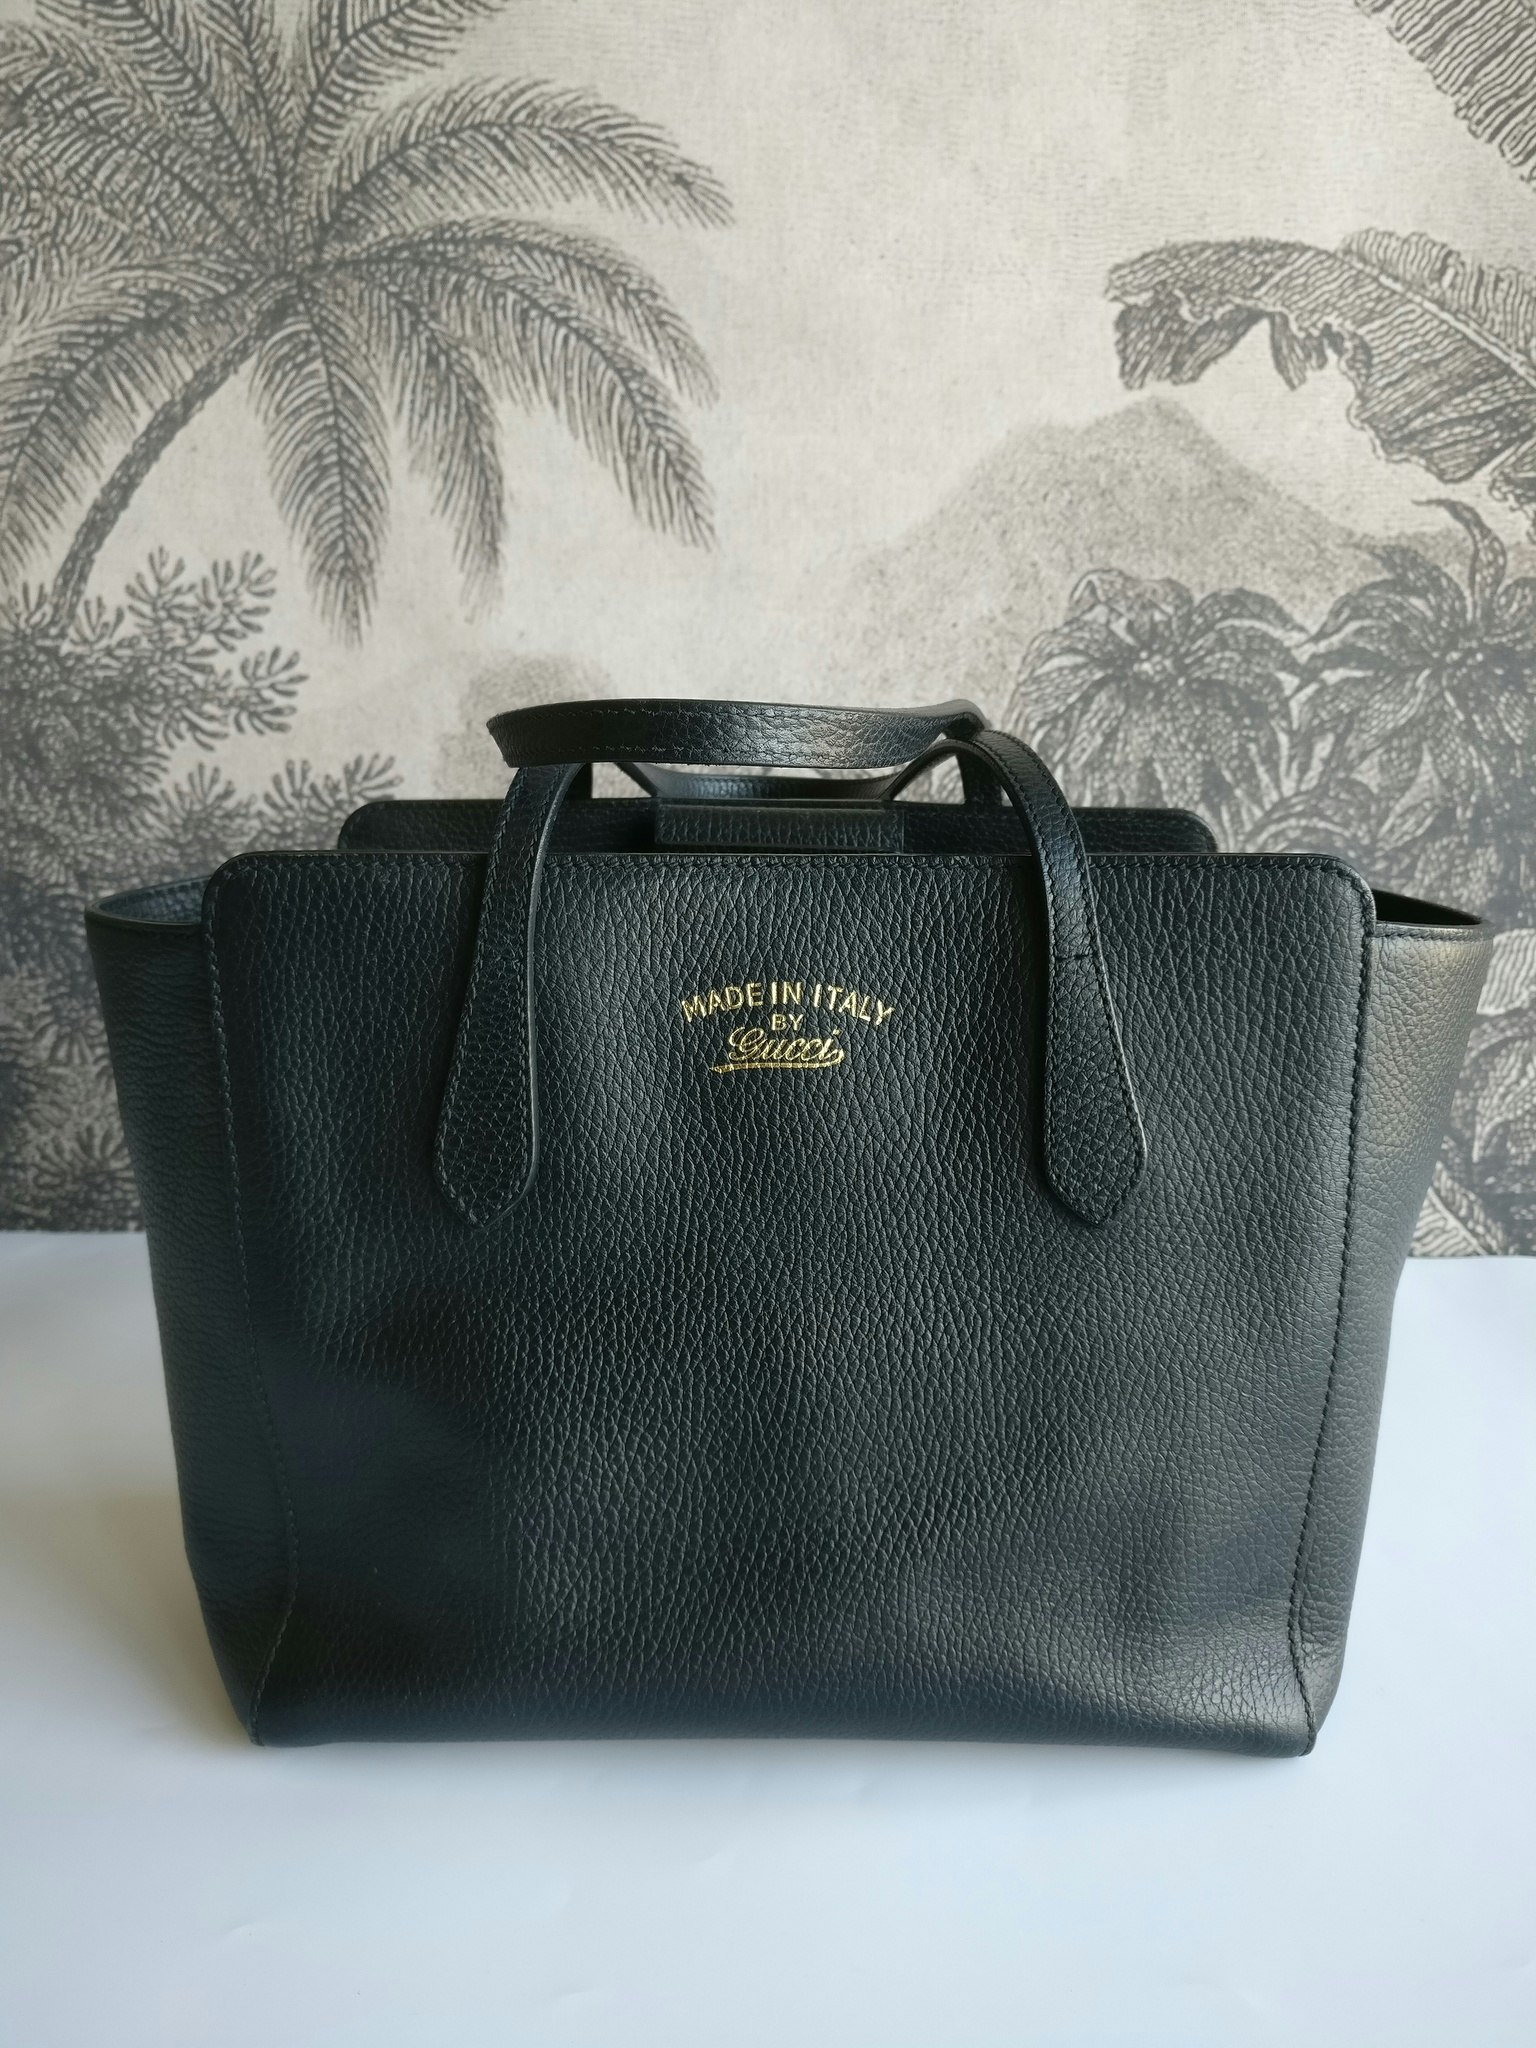 Gucci Swing Mini Leather Tote Bag Black 354408